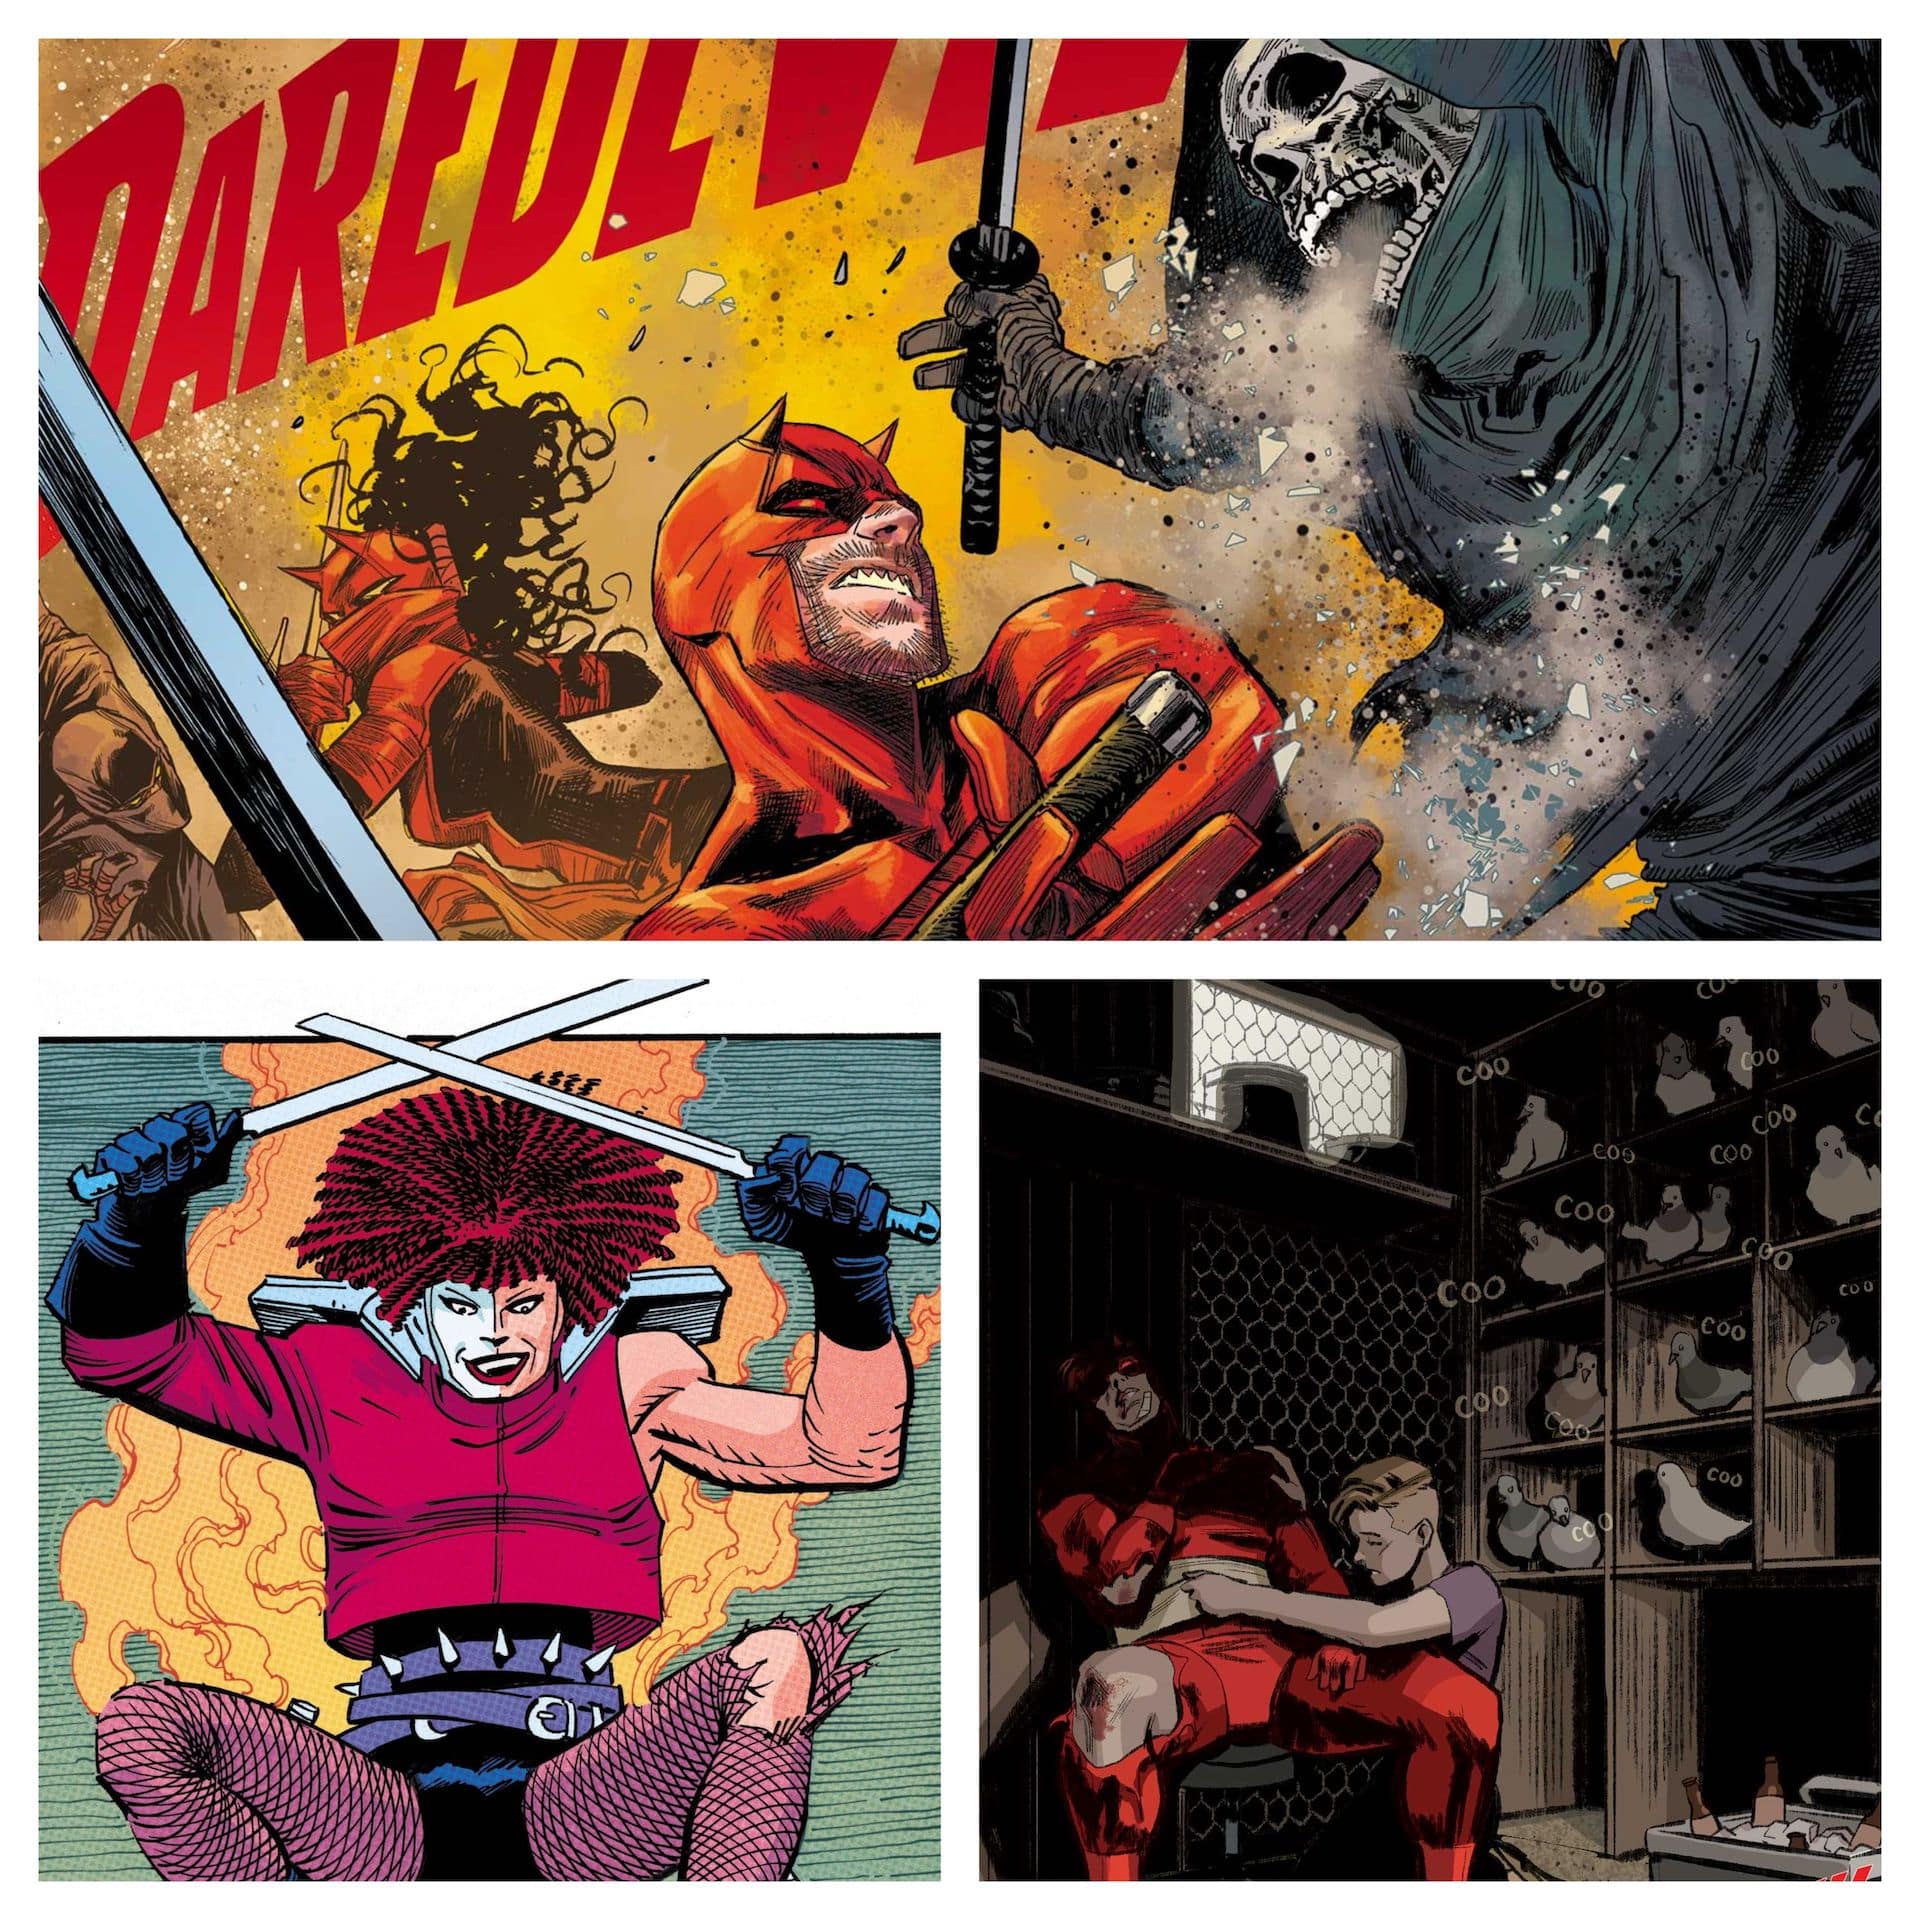 Milestone 'Daredevil' #650 adds Ann Nocenti and John Romita Jr.